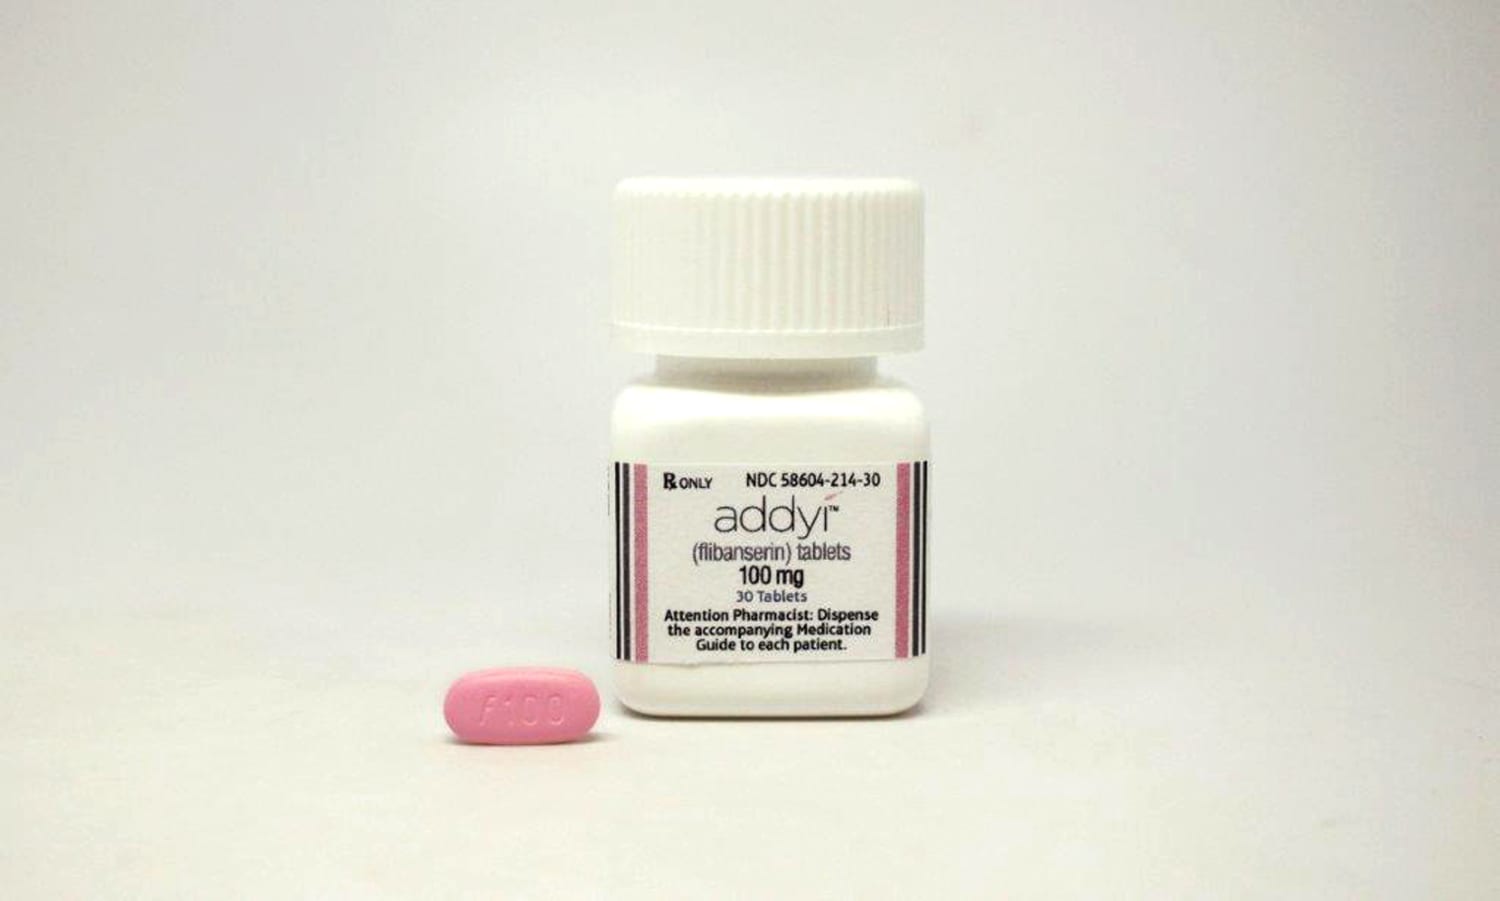 nolvadex (tamoxifen) 20 mg tablets price in india